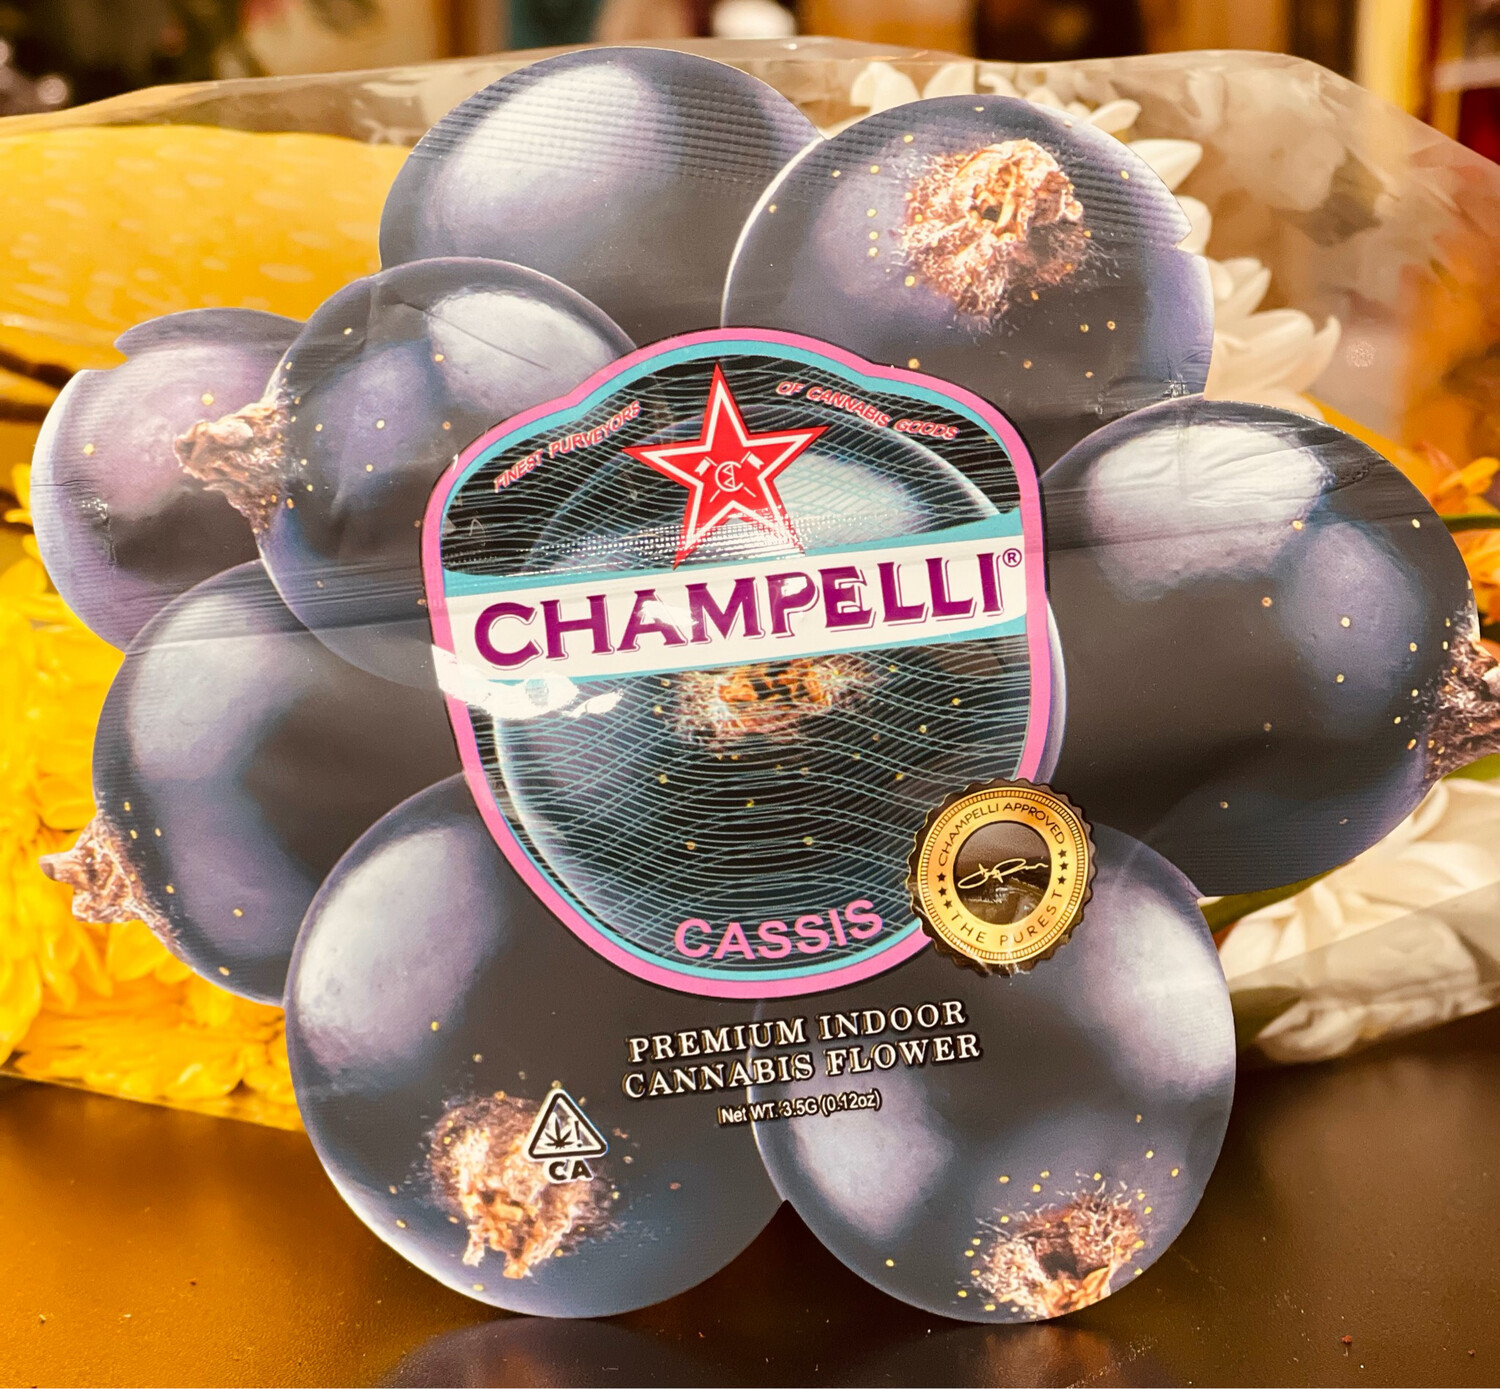 Champelli Cassis